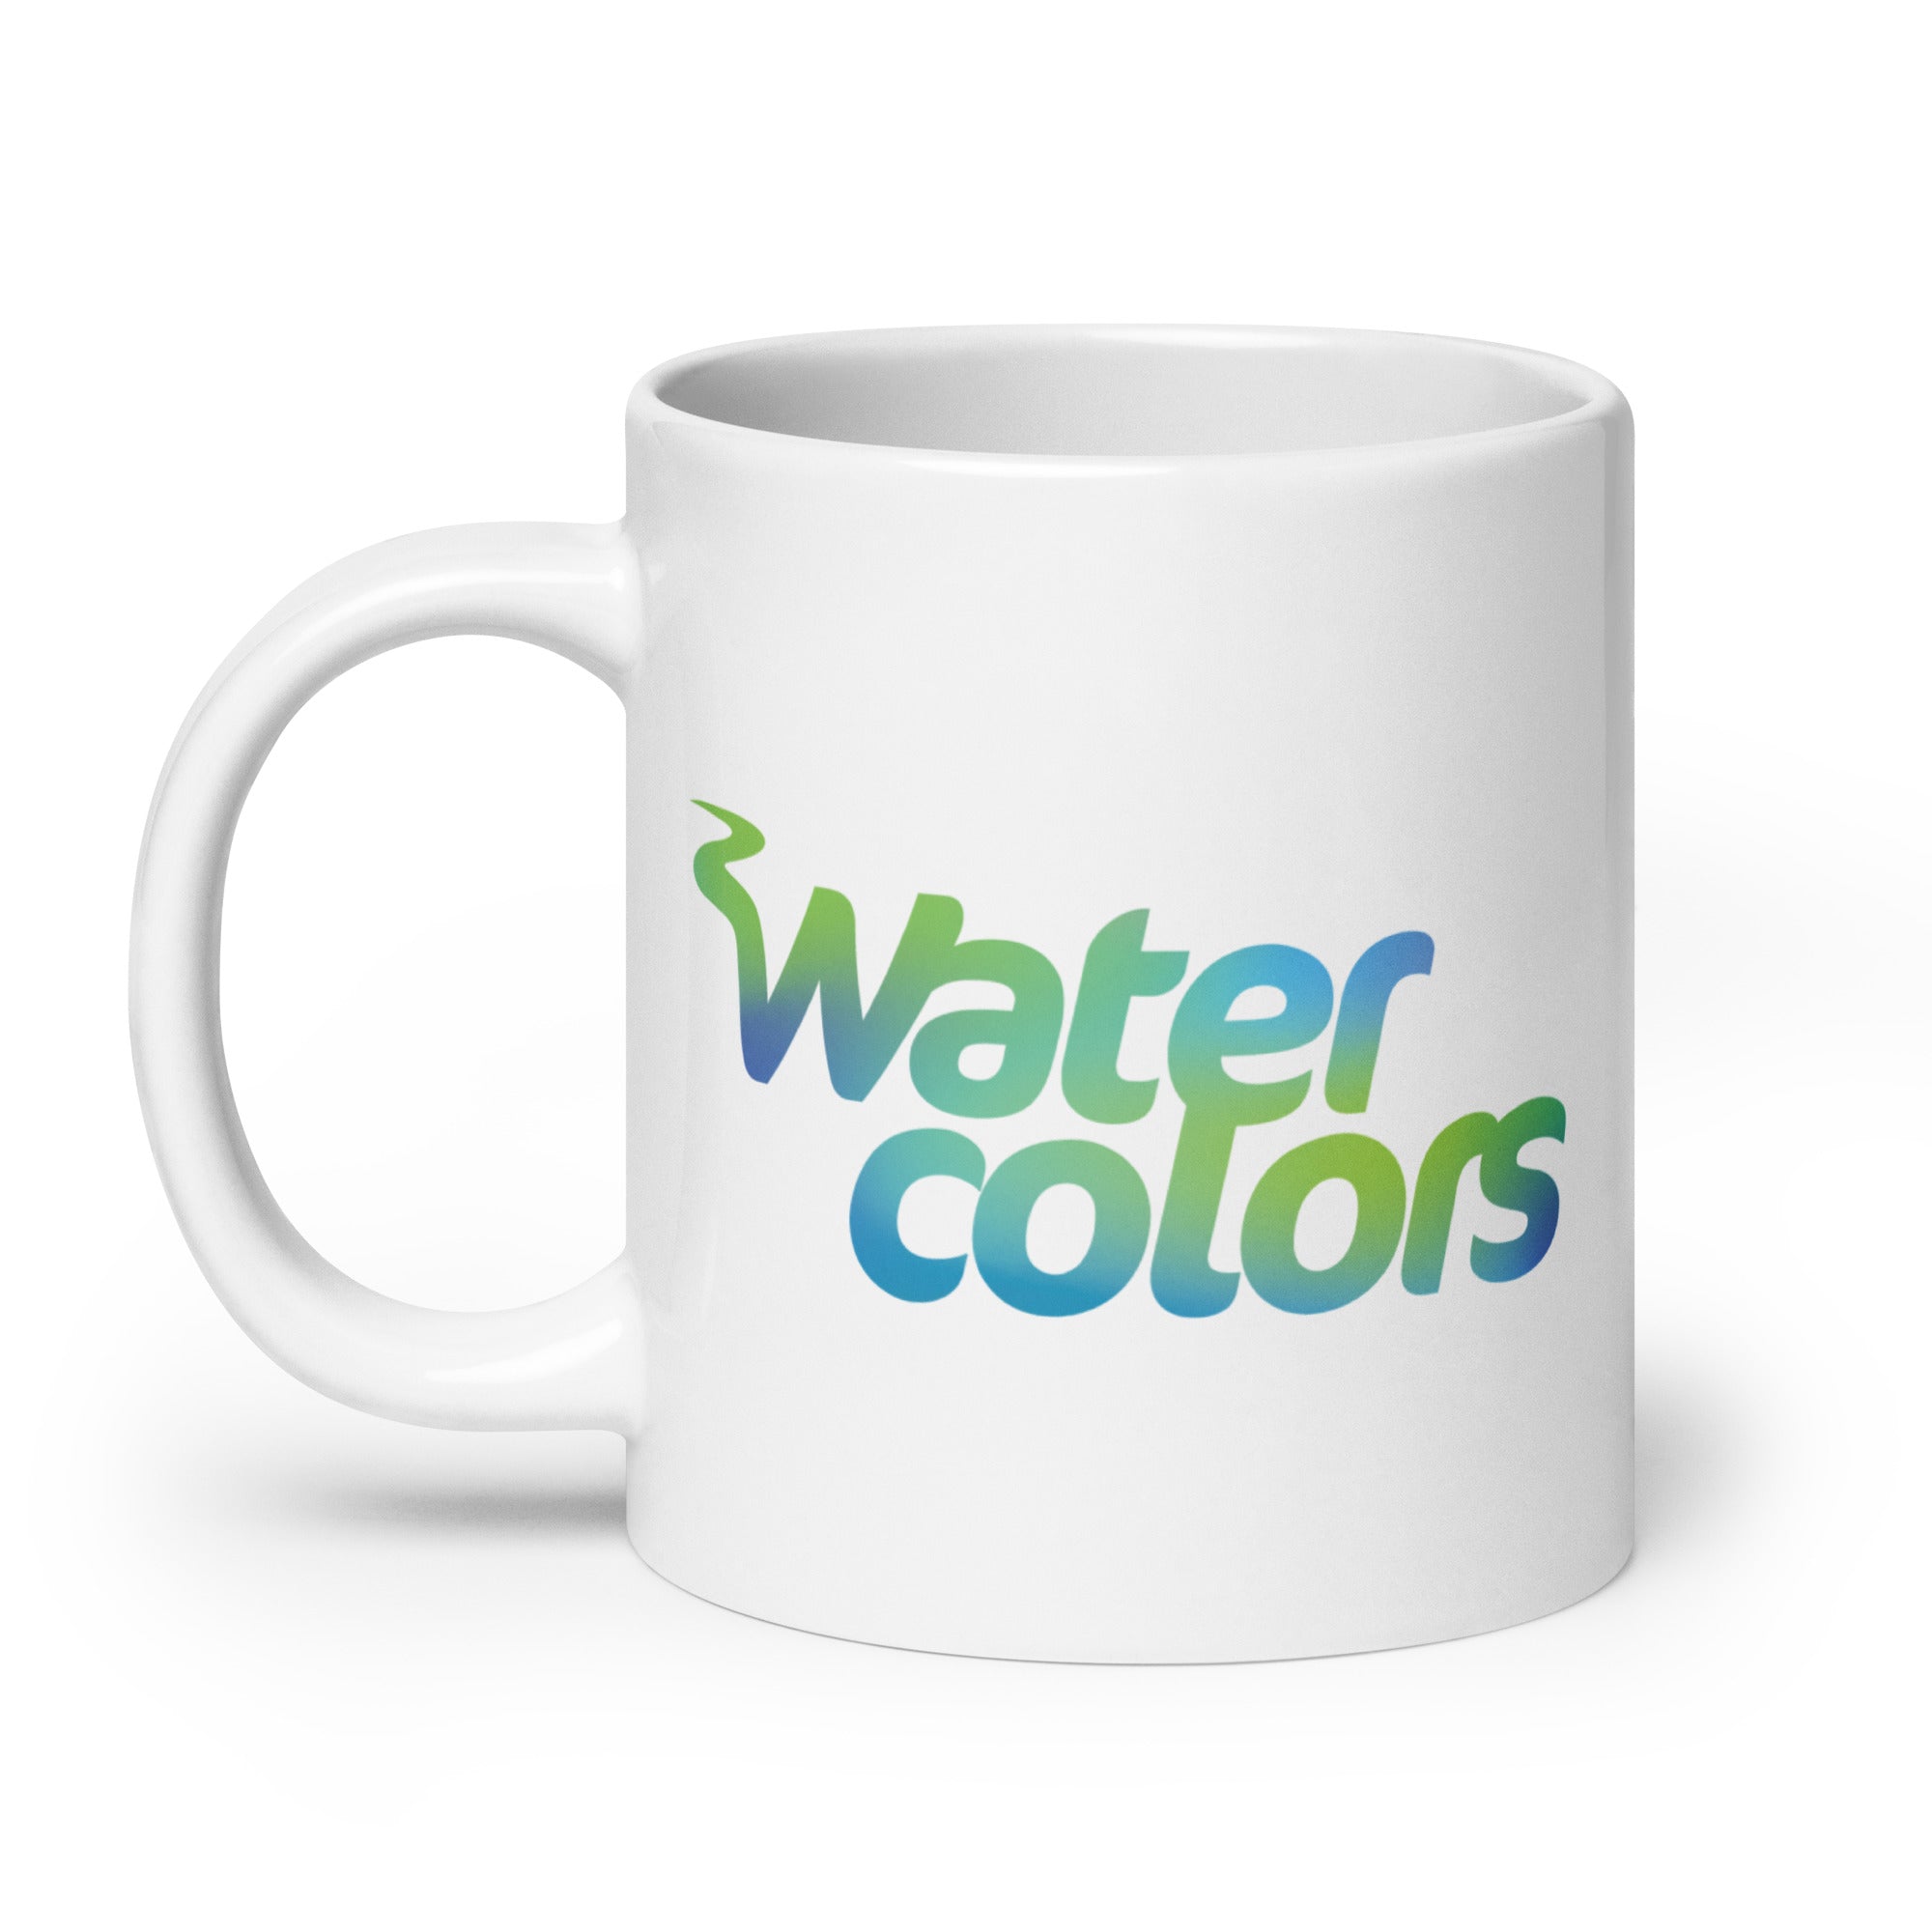 Watercolors: Mug